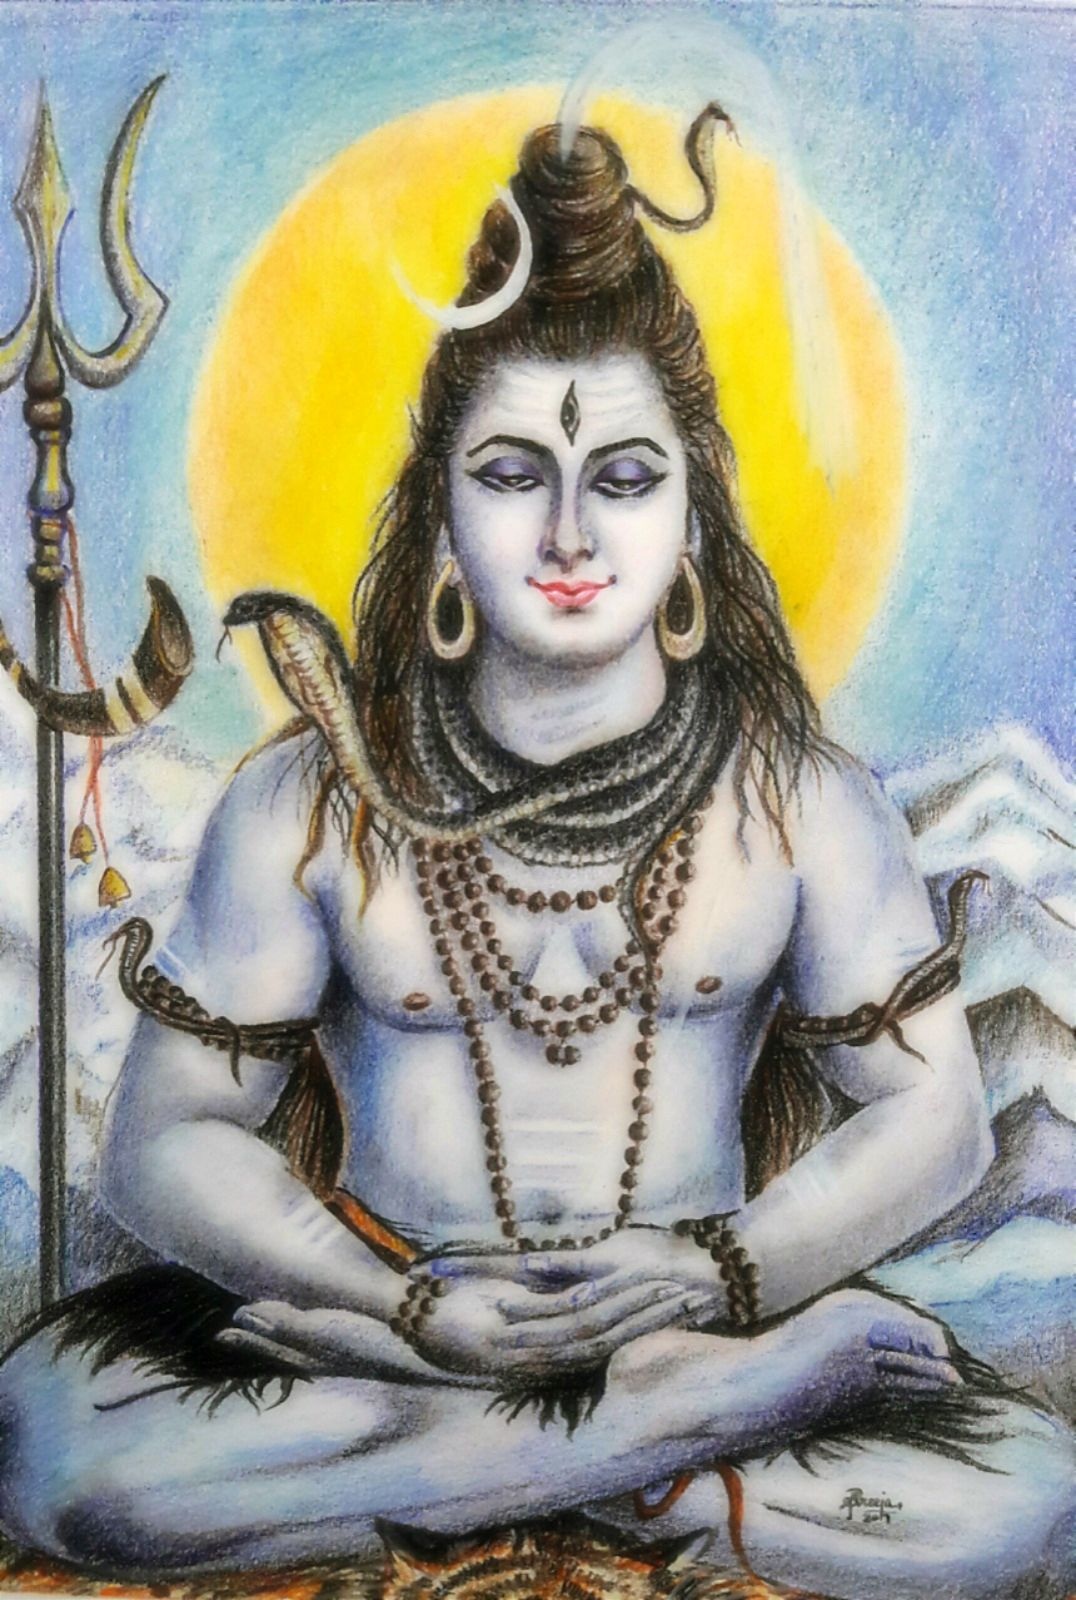 Sivan Photos Hd - Lord Shiva